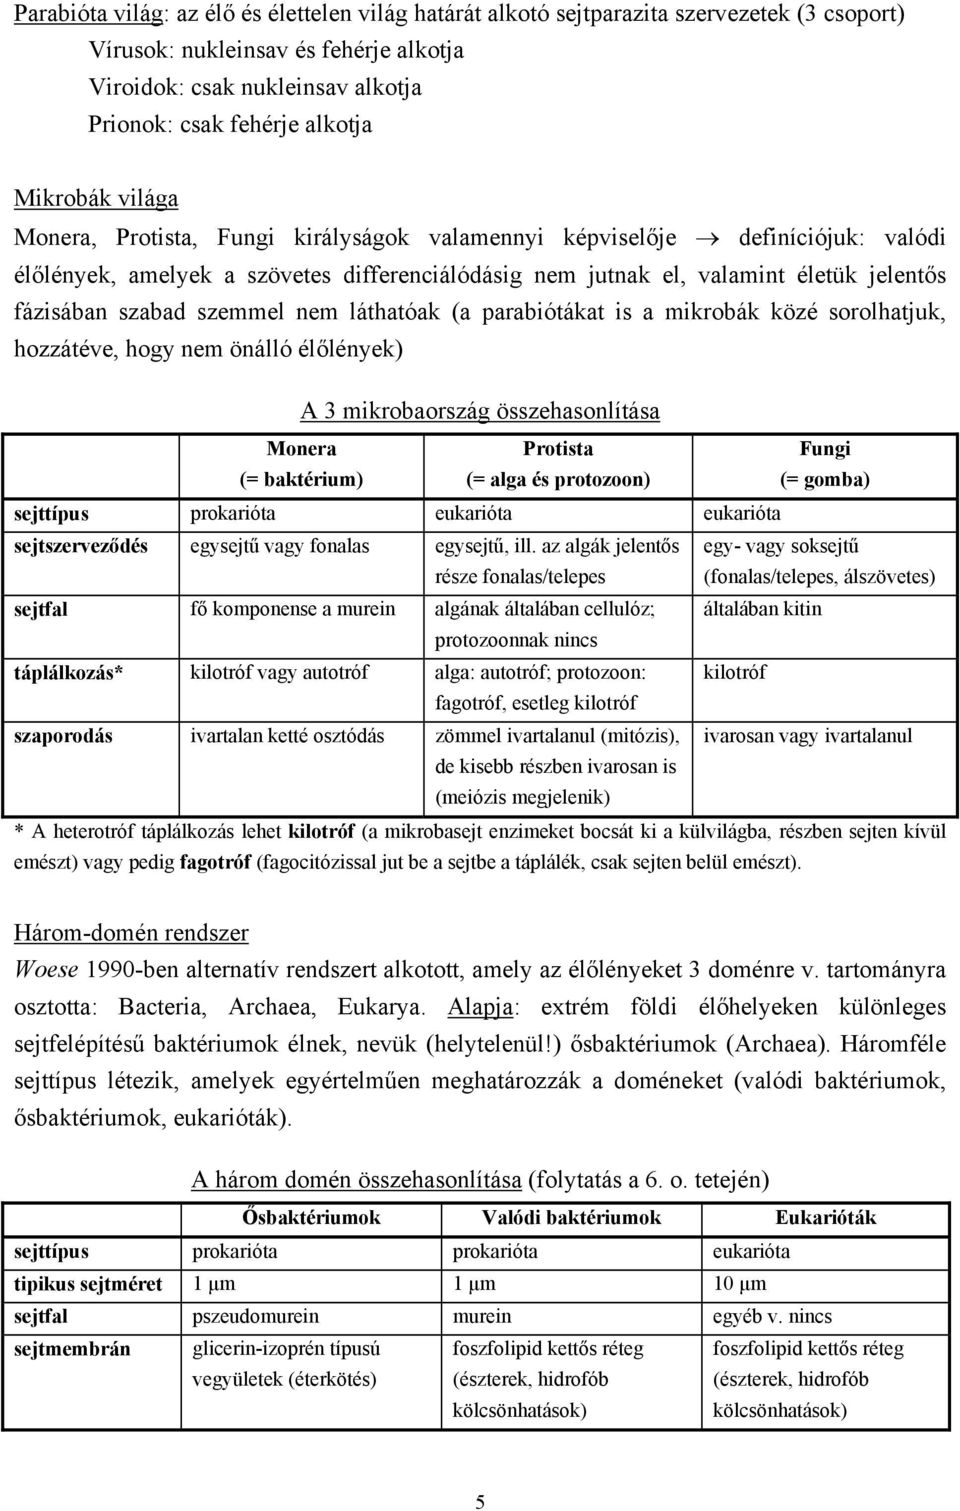 MIKROBIOLÓGIA I. ÁLTALÁNOS MIKROBIOLÓGIA - PDF Free Download